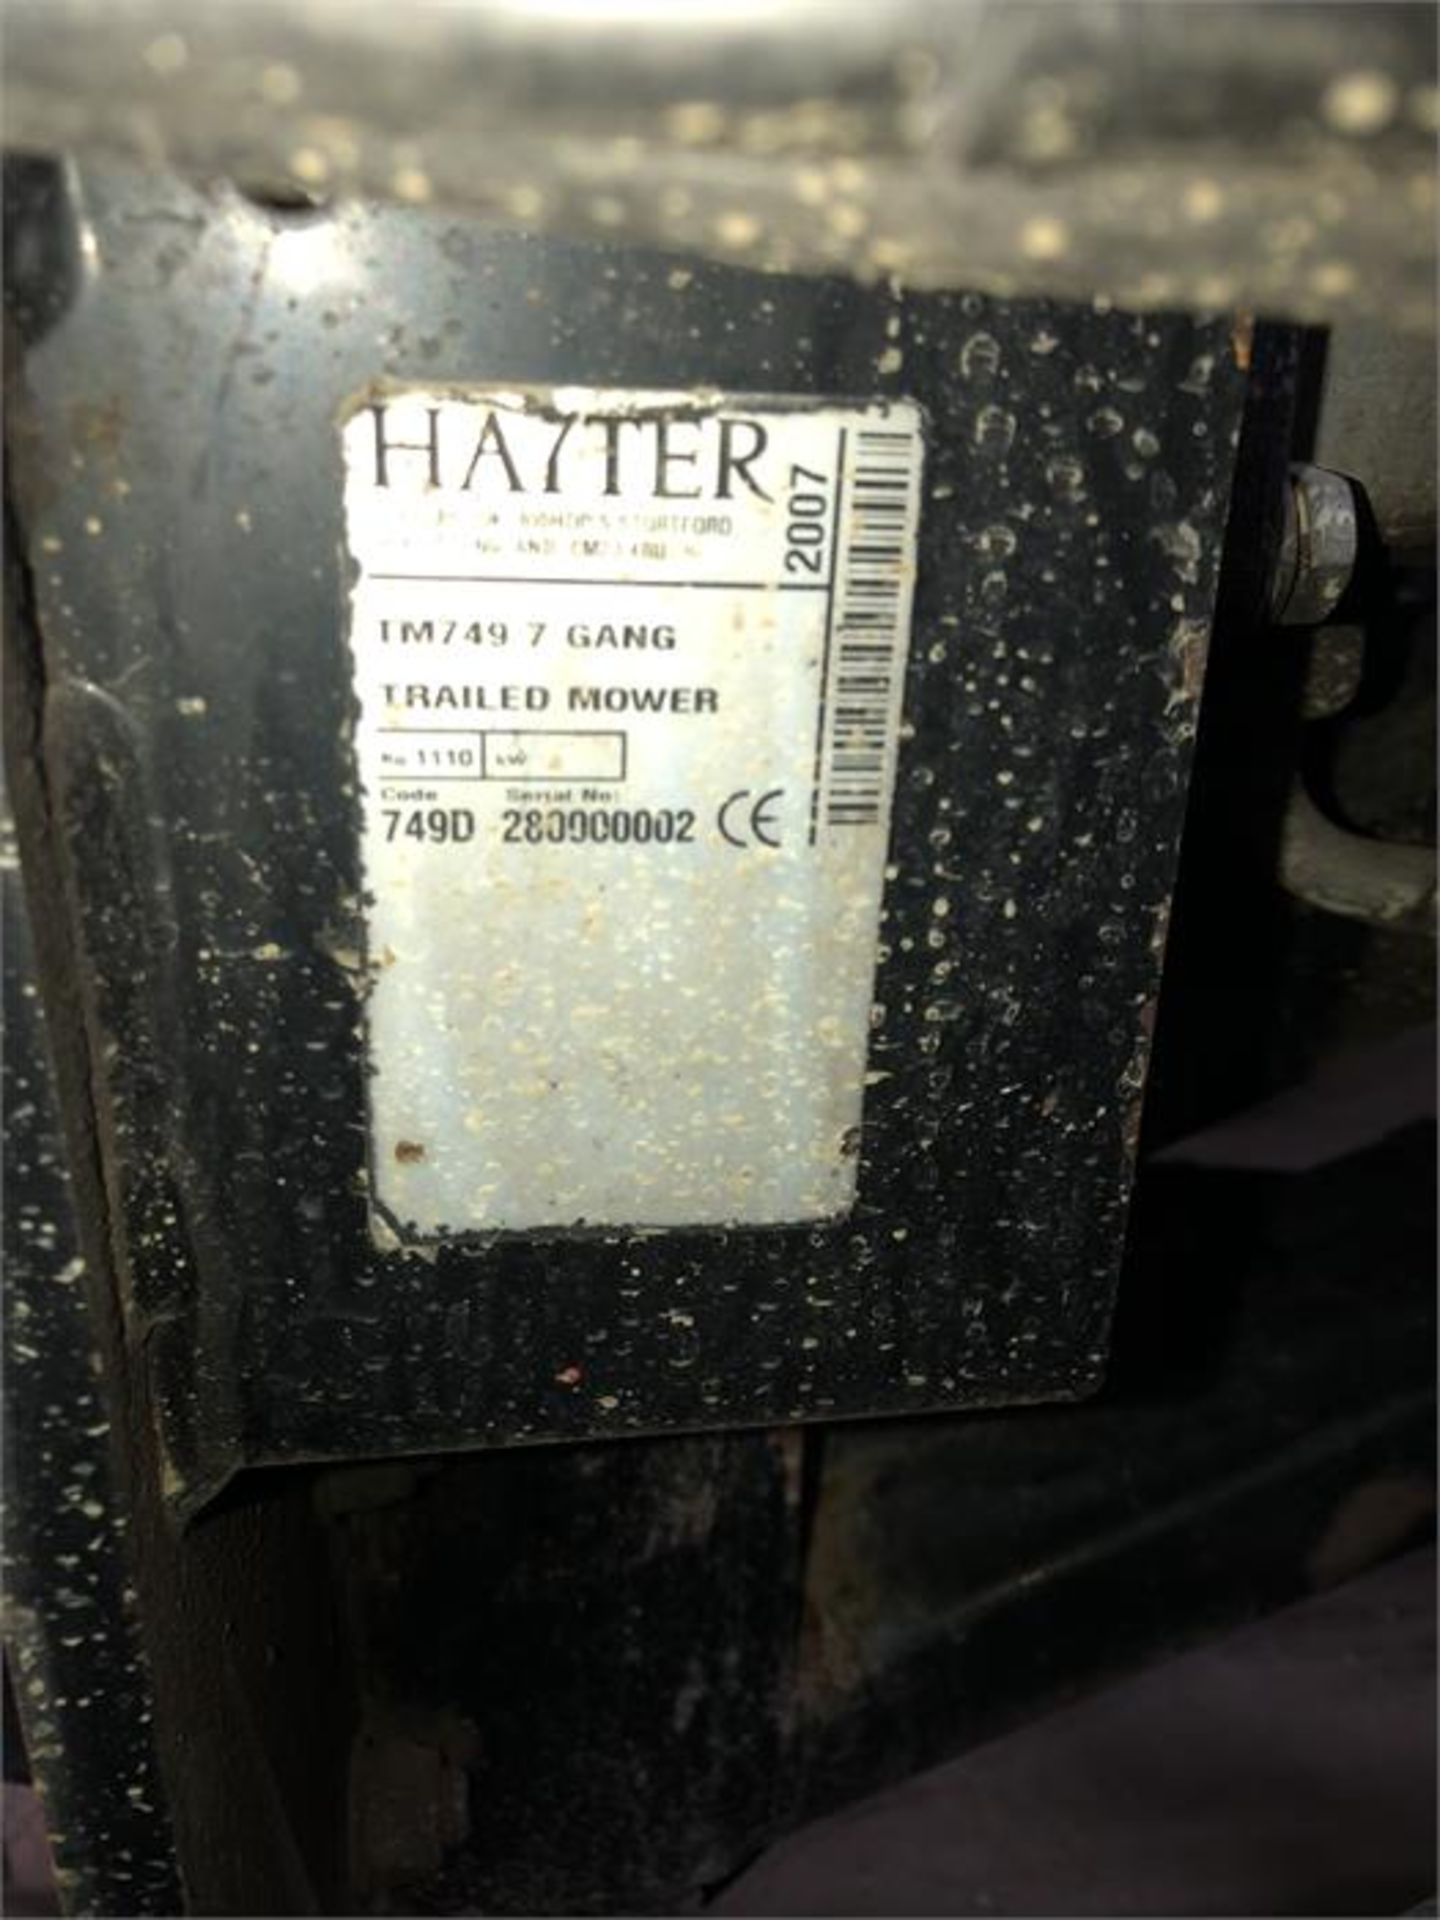 Hayter TM749 7 Gang Trailed Mower - Image 4 of 5